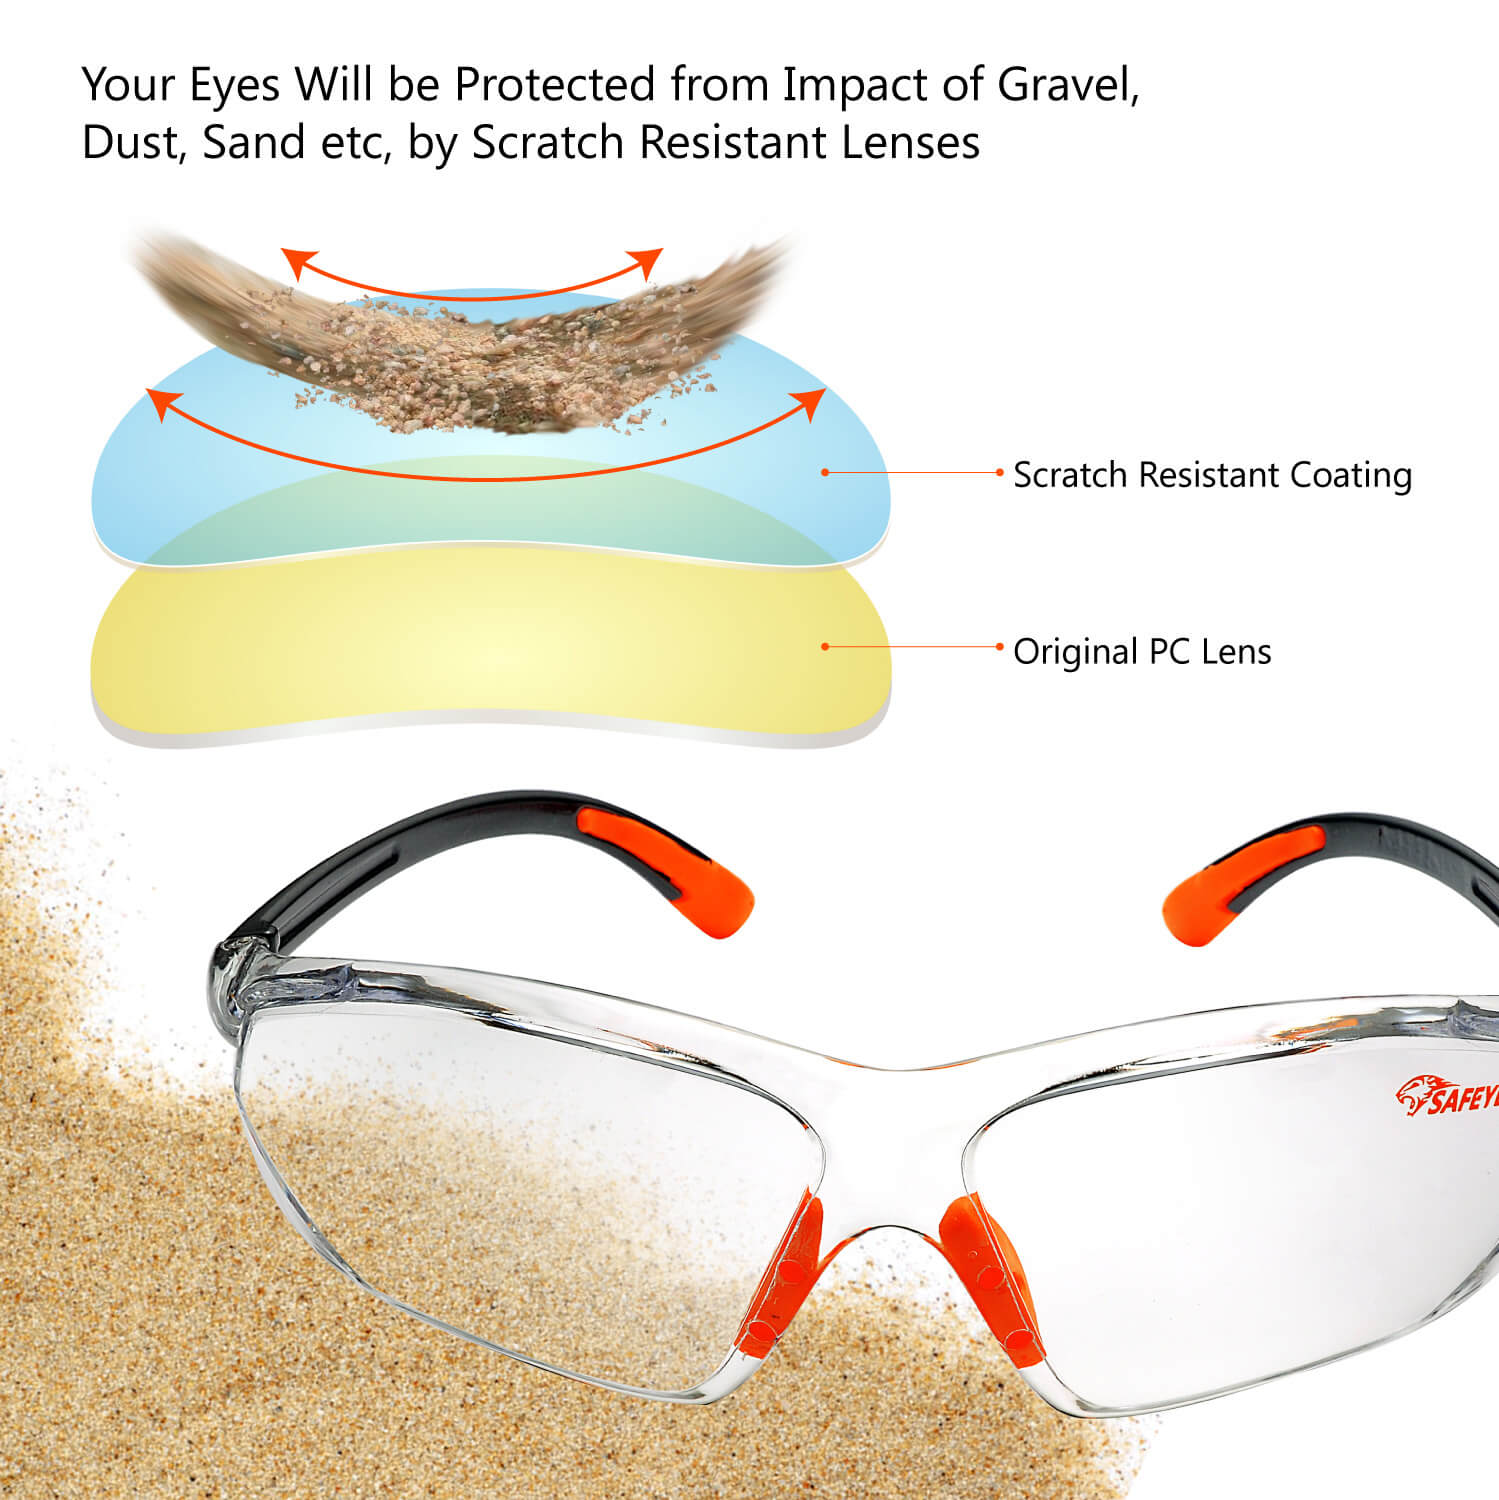 Safeyear Scratch Resistant Anti Fog Z87 Safety Glasses for Men & Women Protective Eyewear Lab Work Glasses